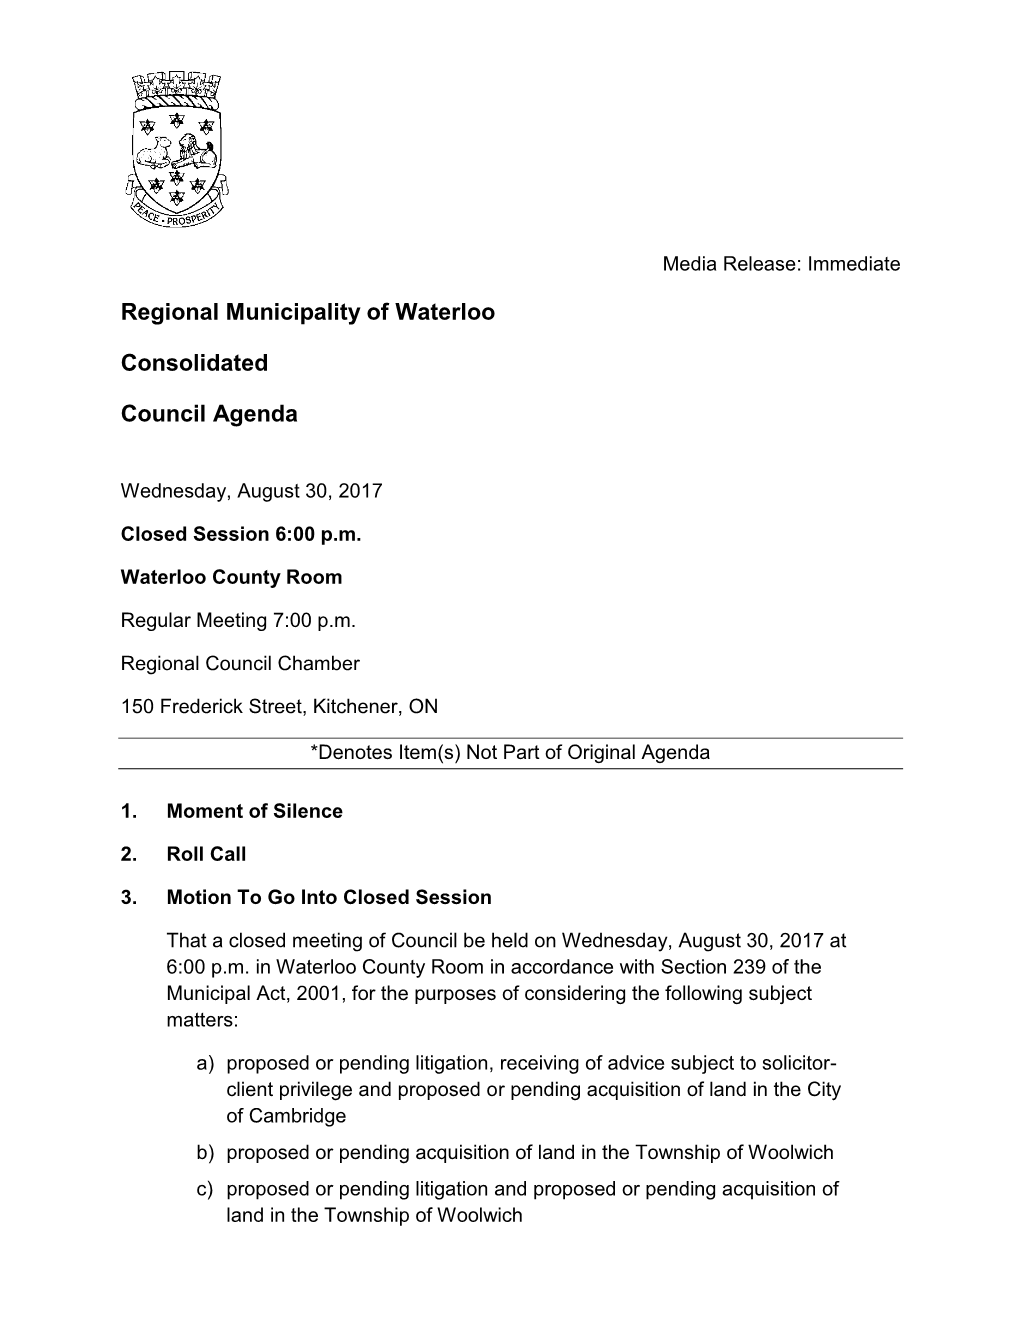 Regional Municipality of Waterloo Consolidated Council Agenda